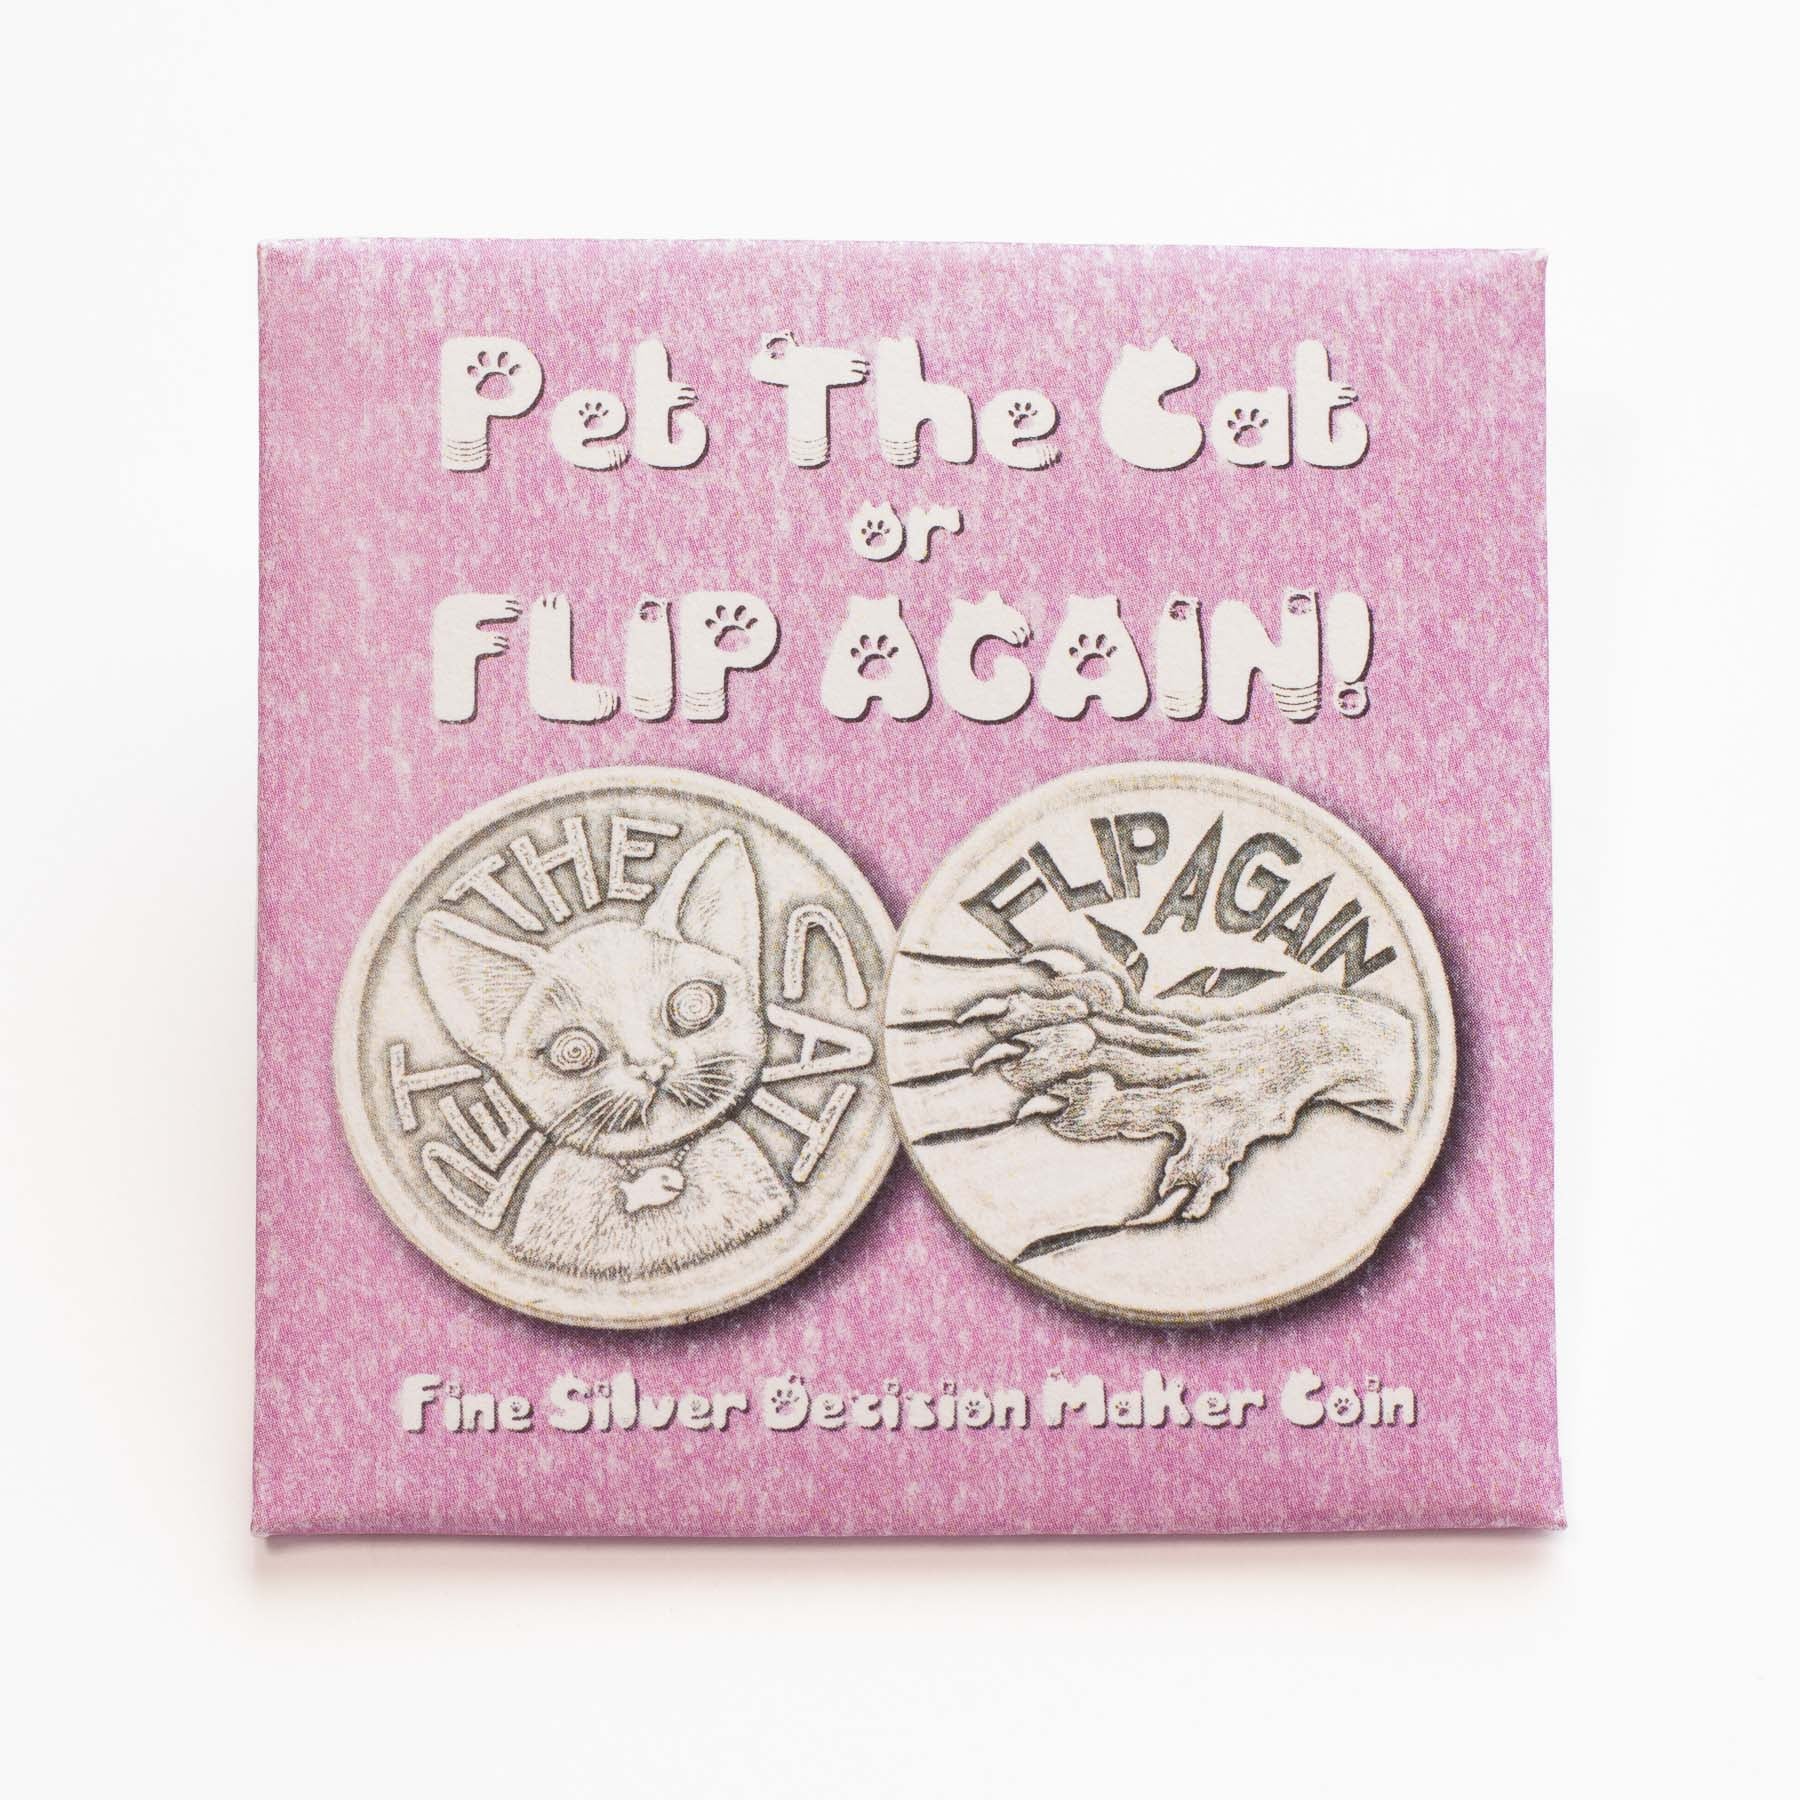 Pet the Cat / Flip Again Silver Decision Maker Coin